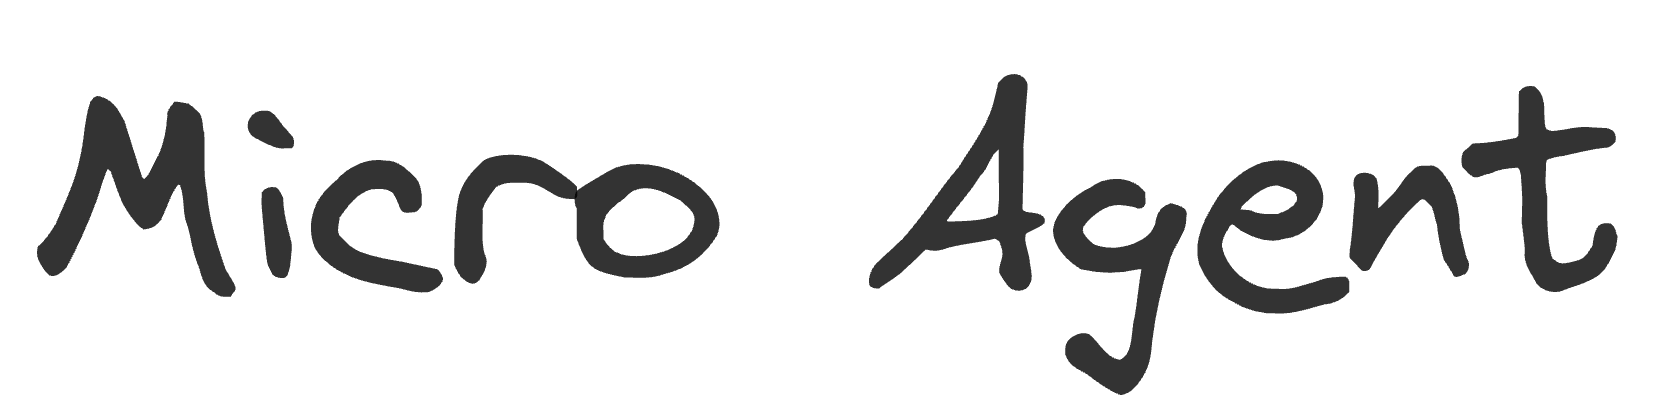 AI Shell logo